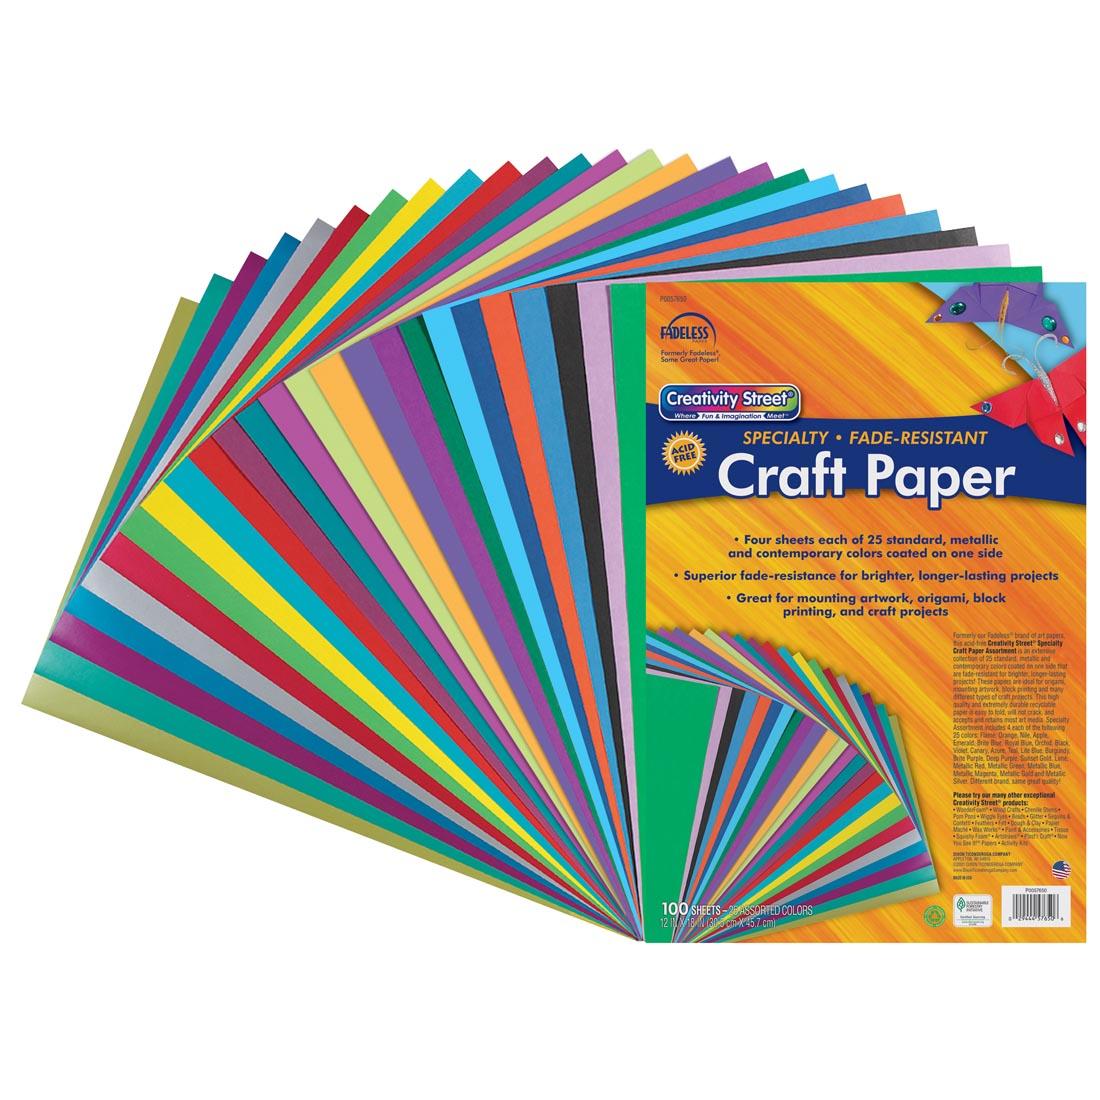 Creativity Street Specialty Craft Paper